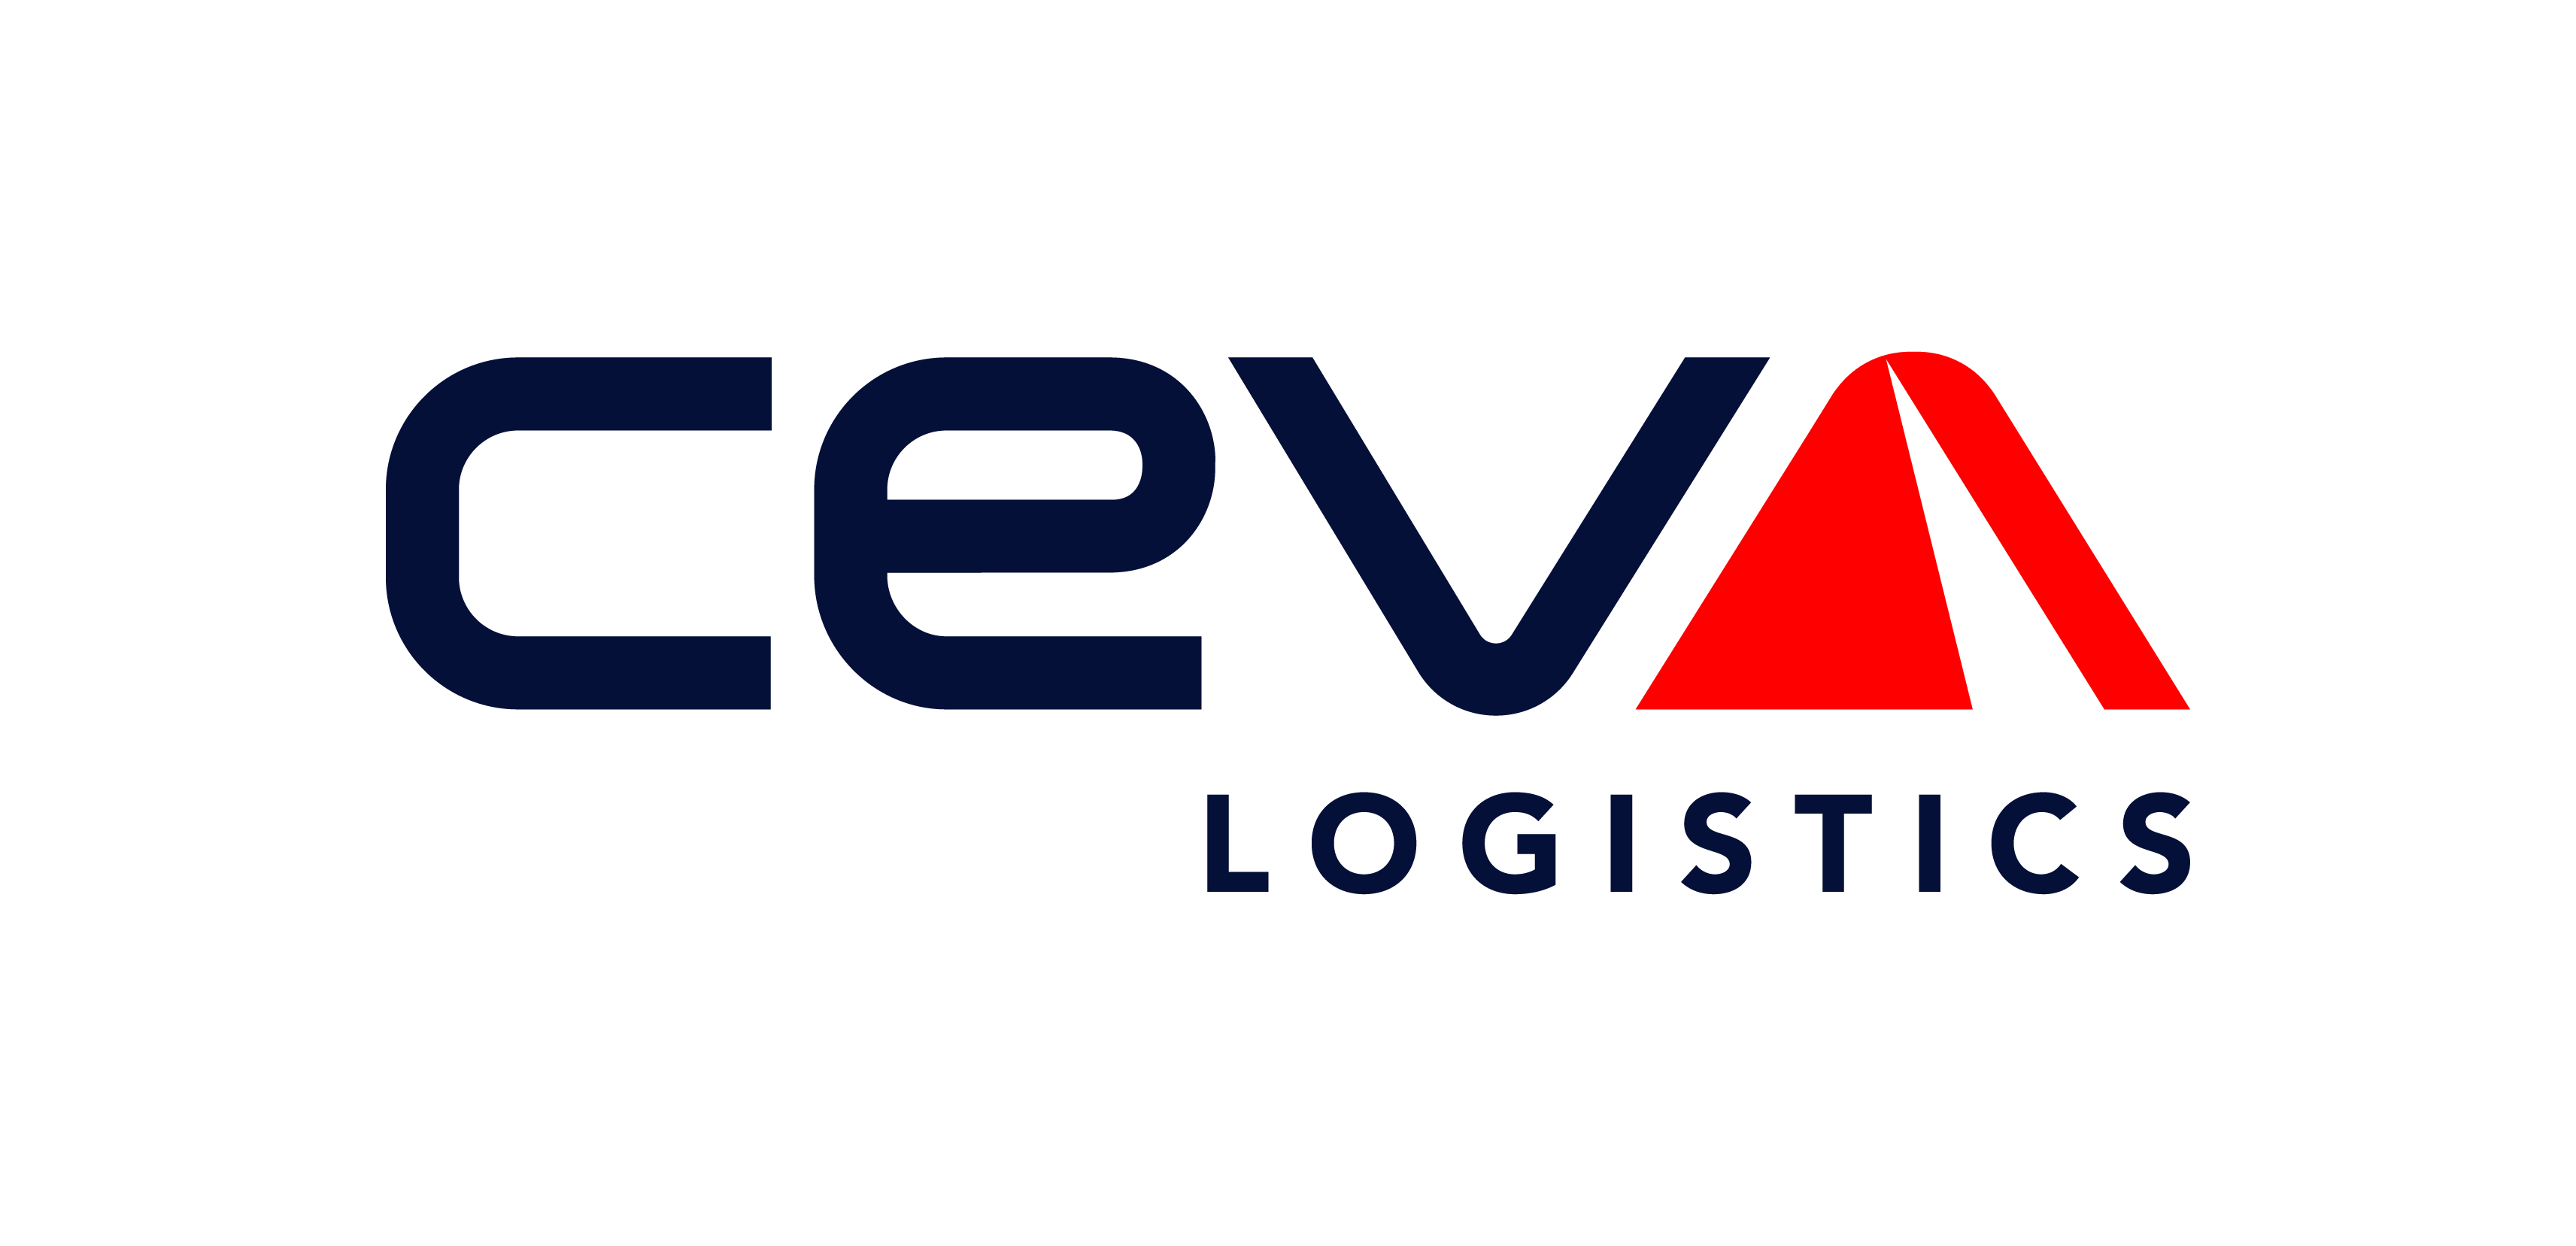 CEVA_Logistics_New_Logo